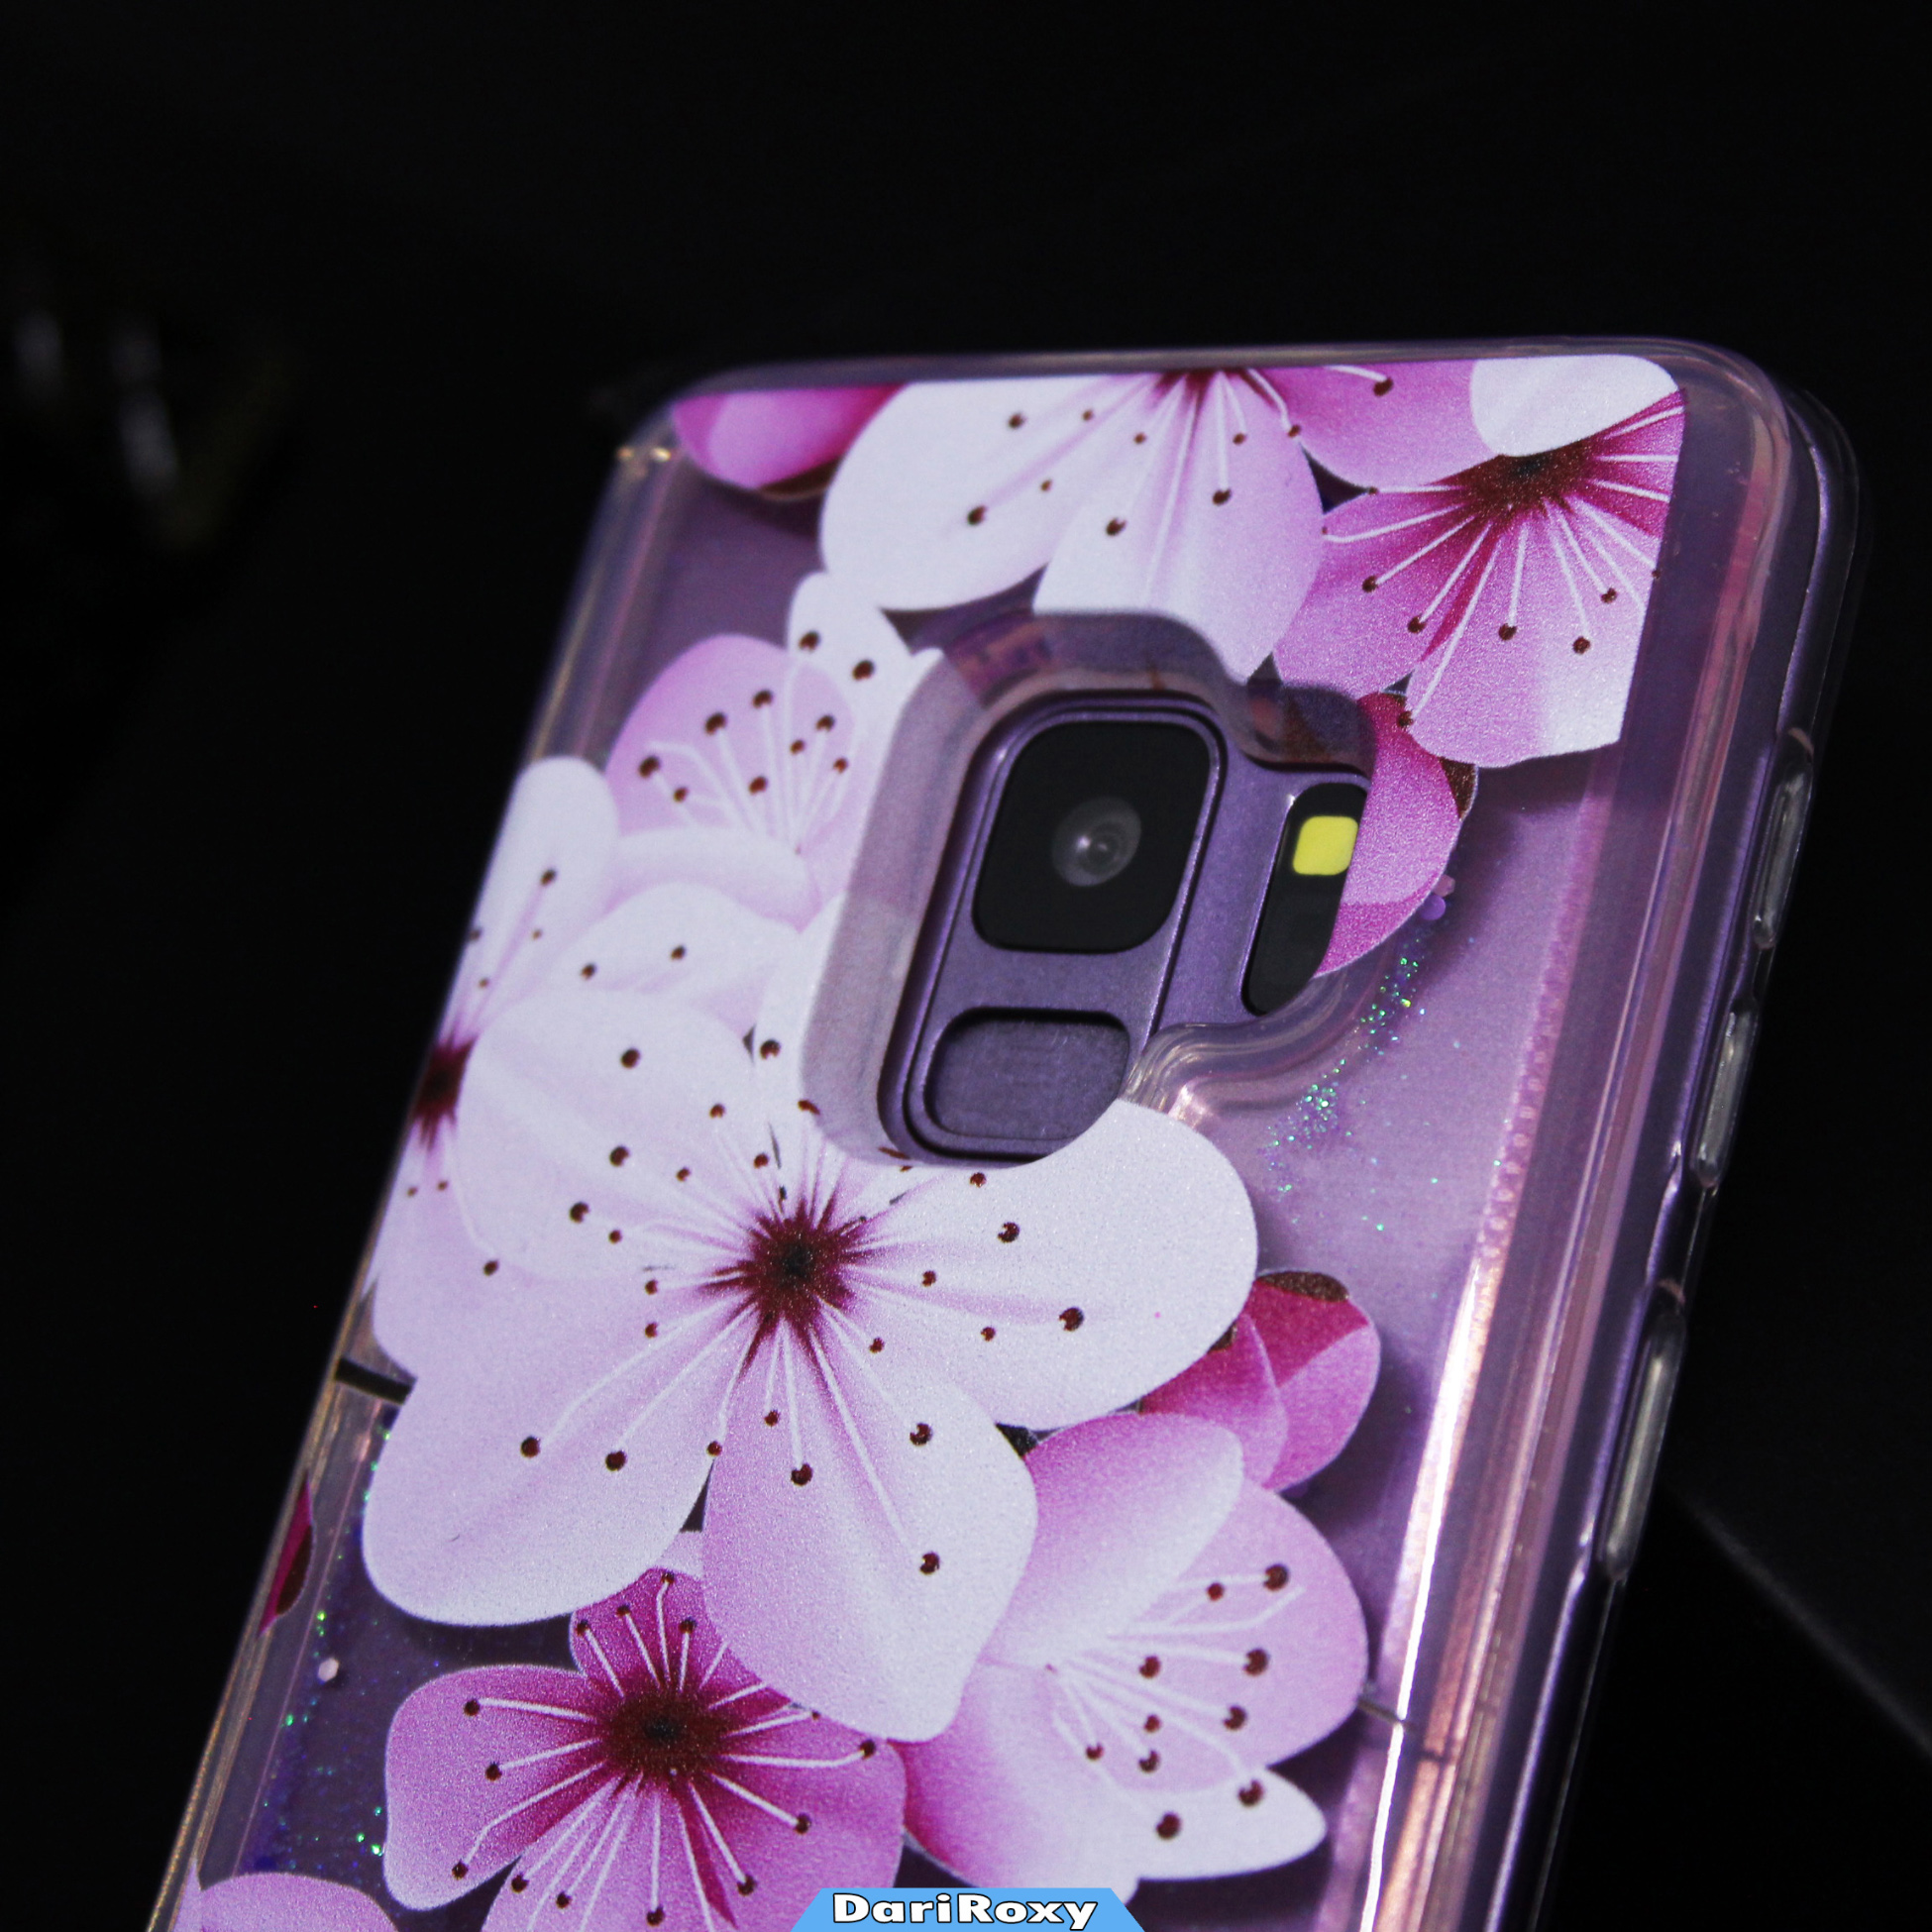 Dariroxy Case Samsung Galaxy S7 Edge Soft Case Glitter Blink